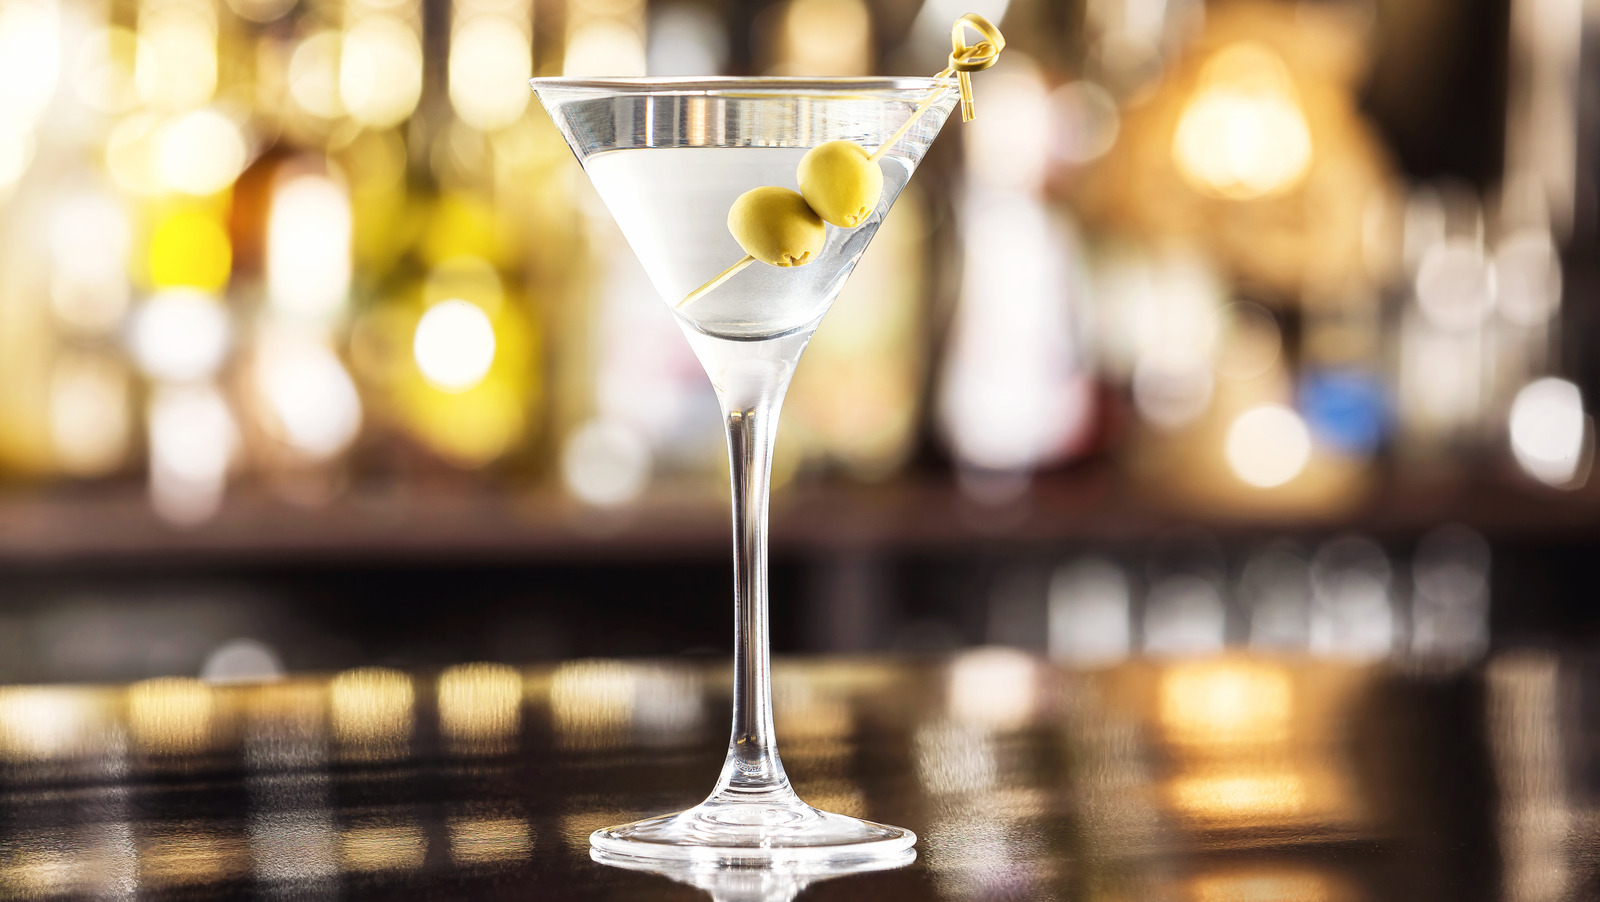 James Bond to drink sponsored vodka martinis in Spectre